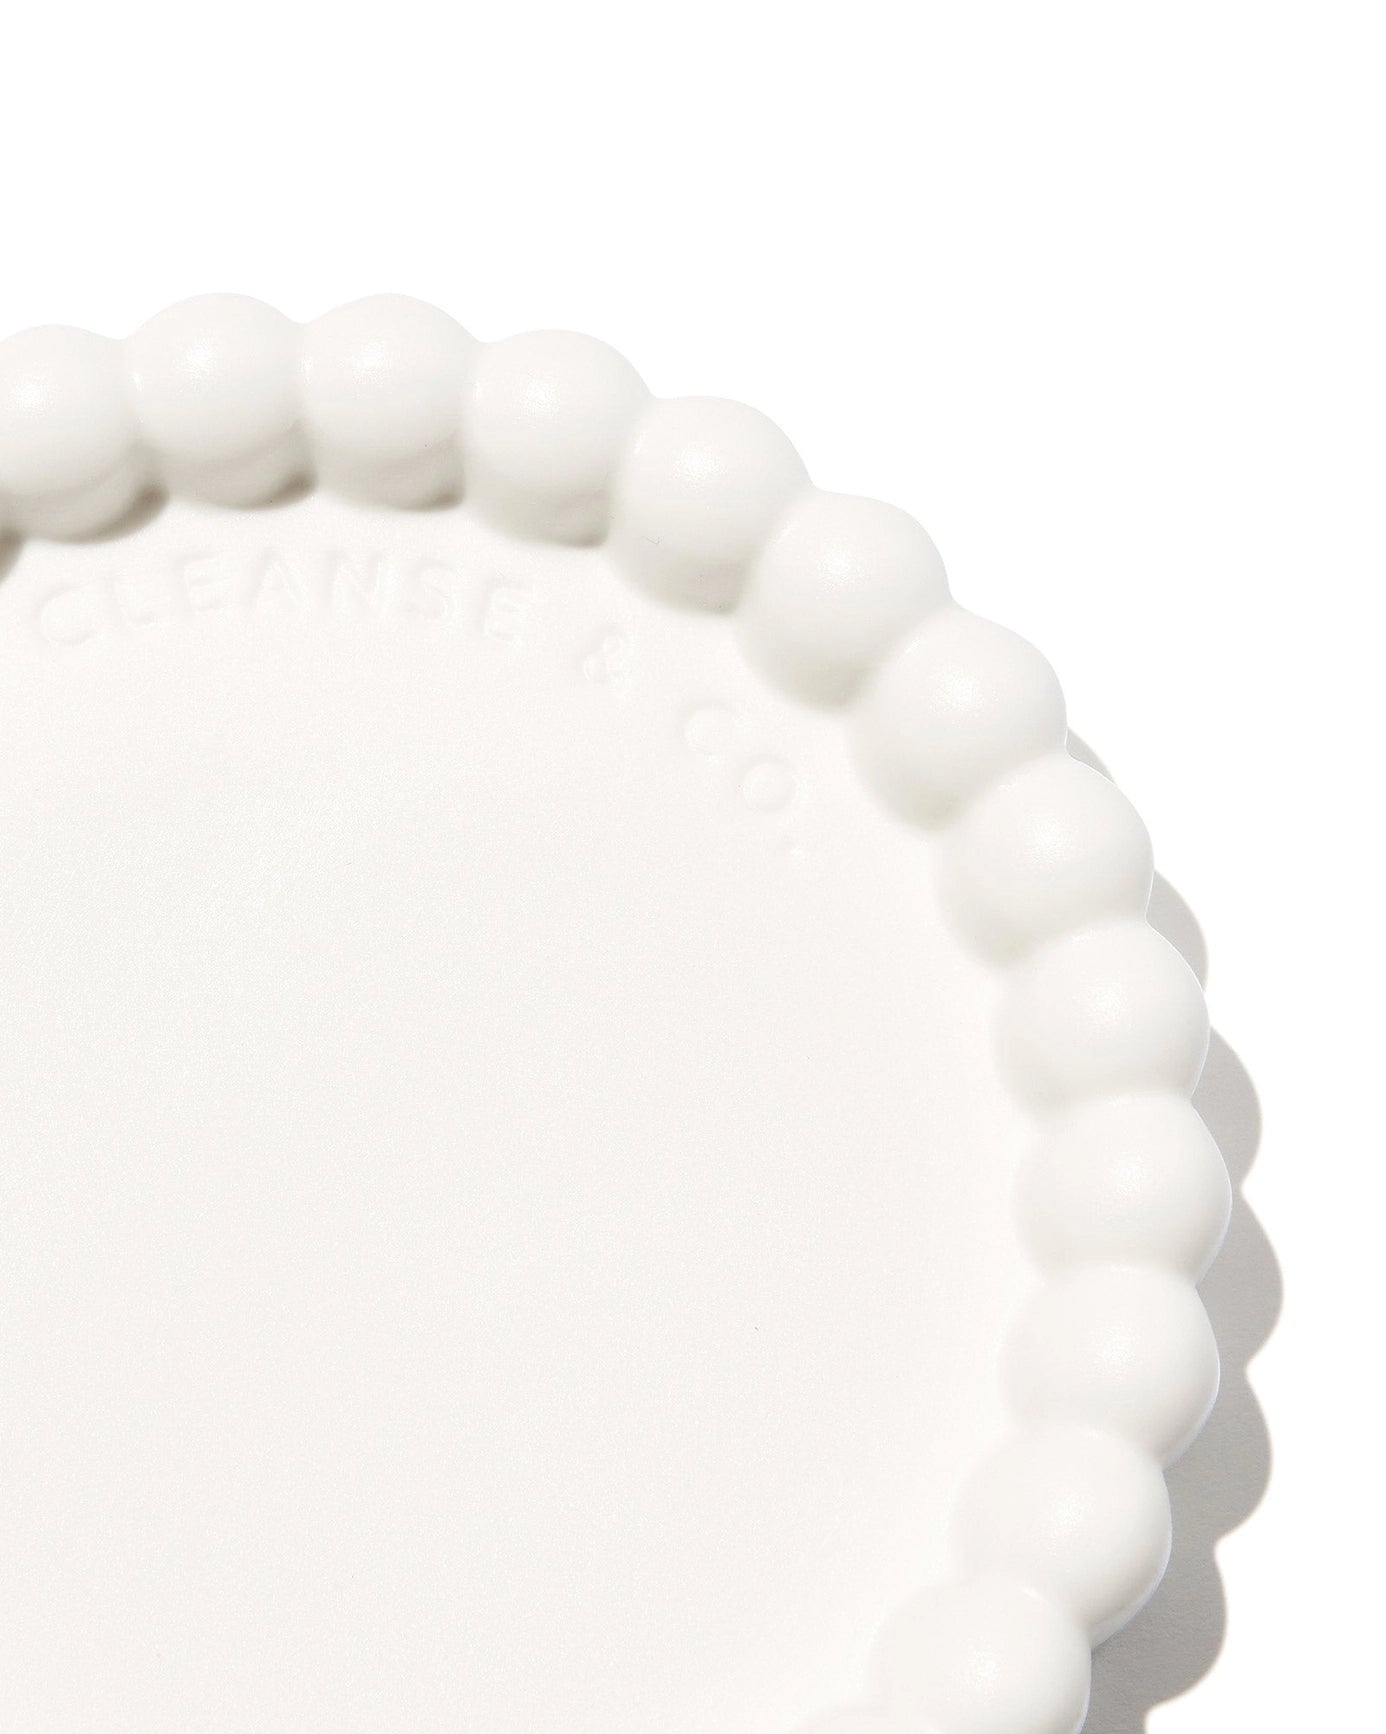 Ceramic Trinket Dish - White